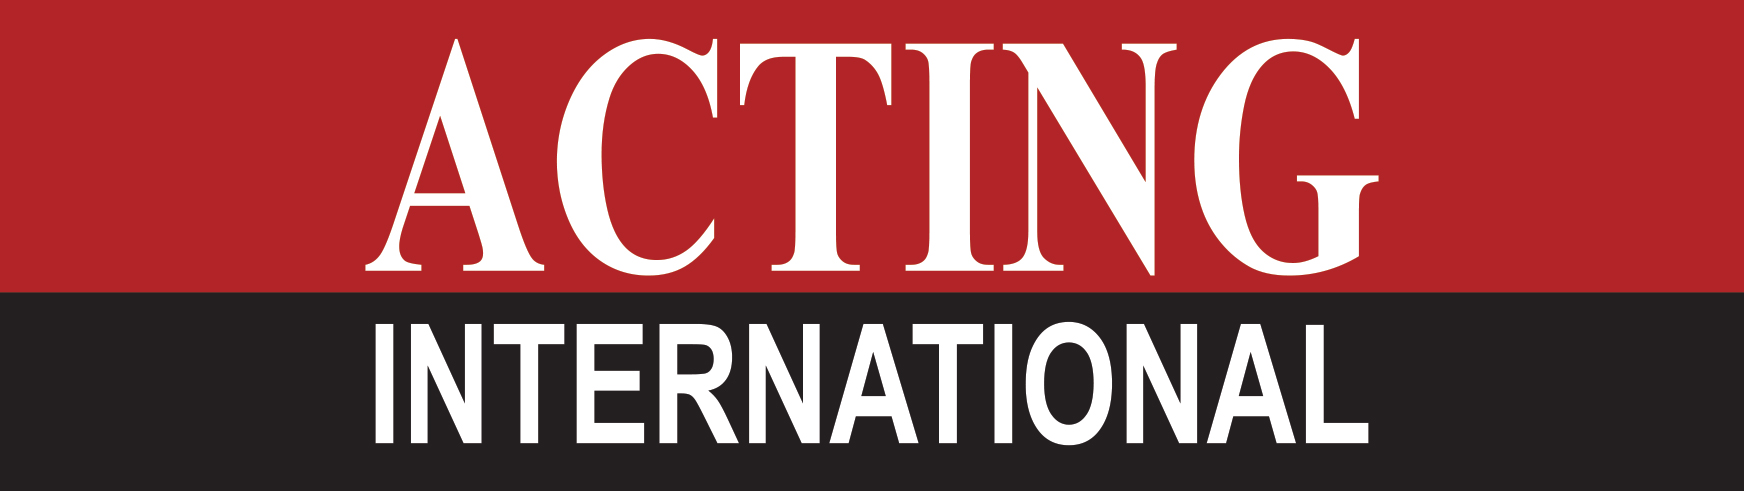 acting international logo